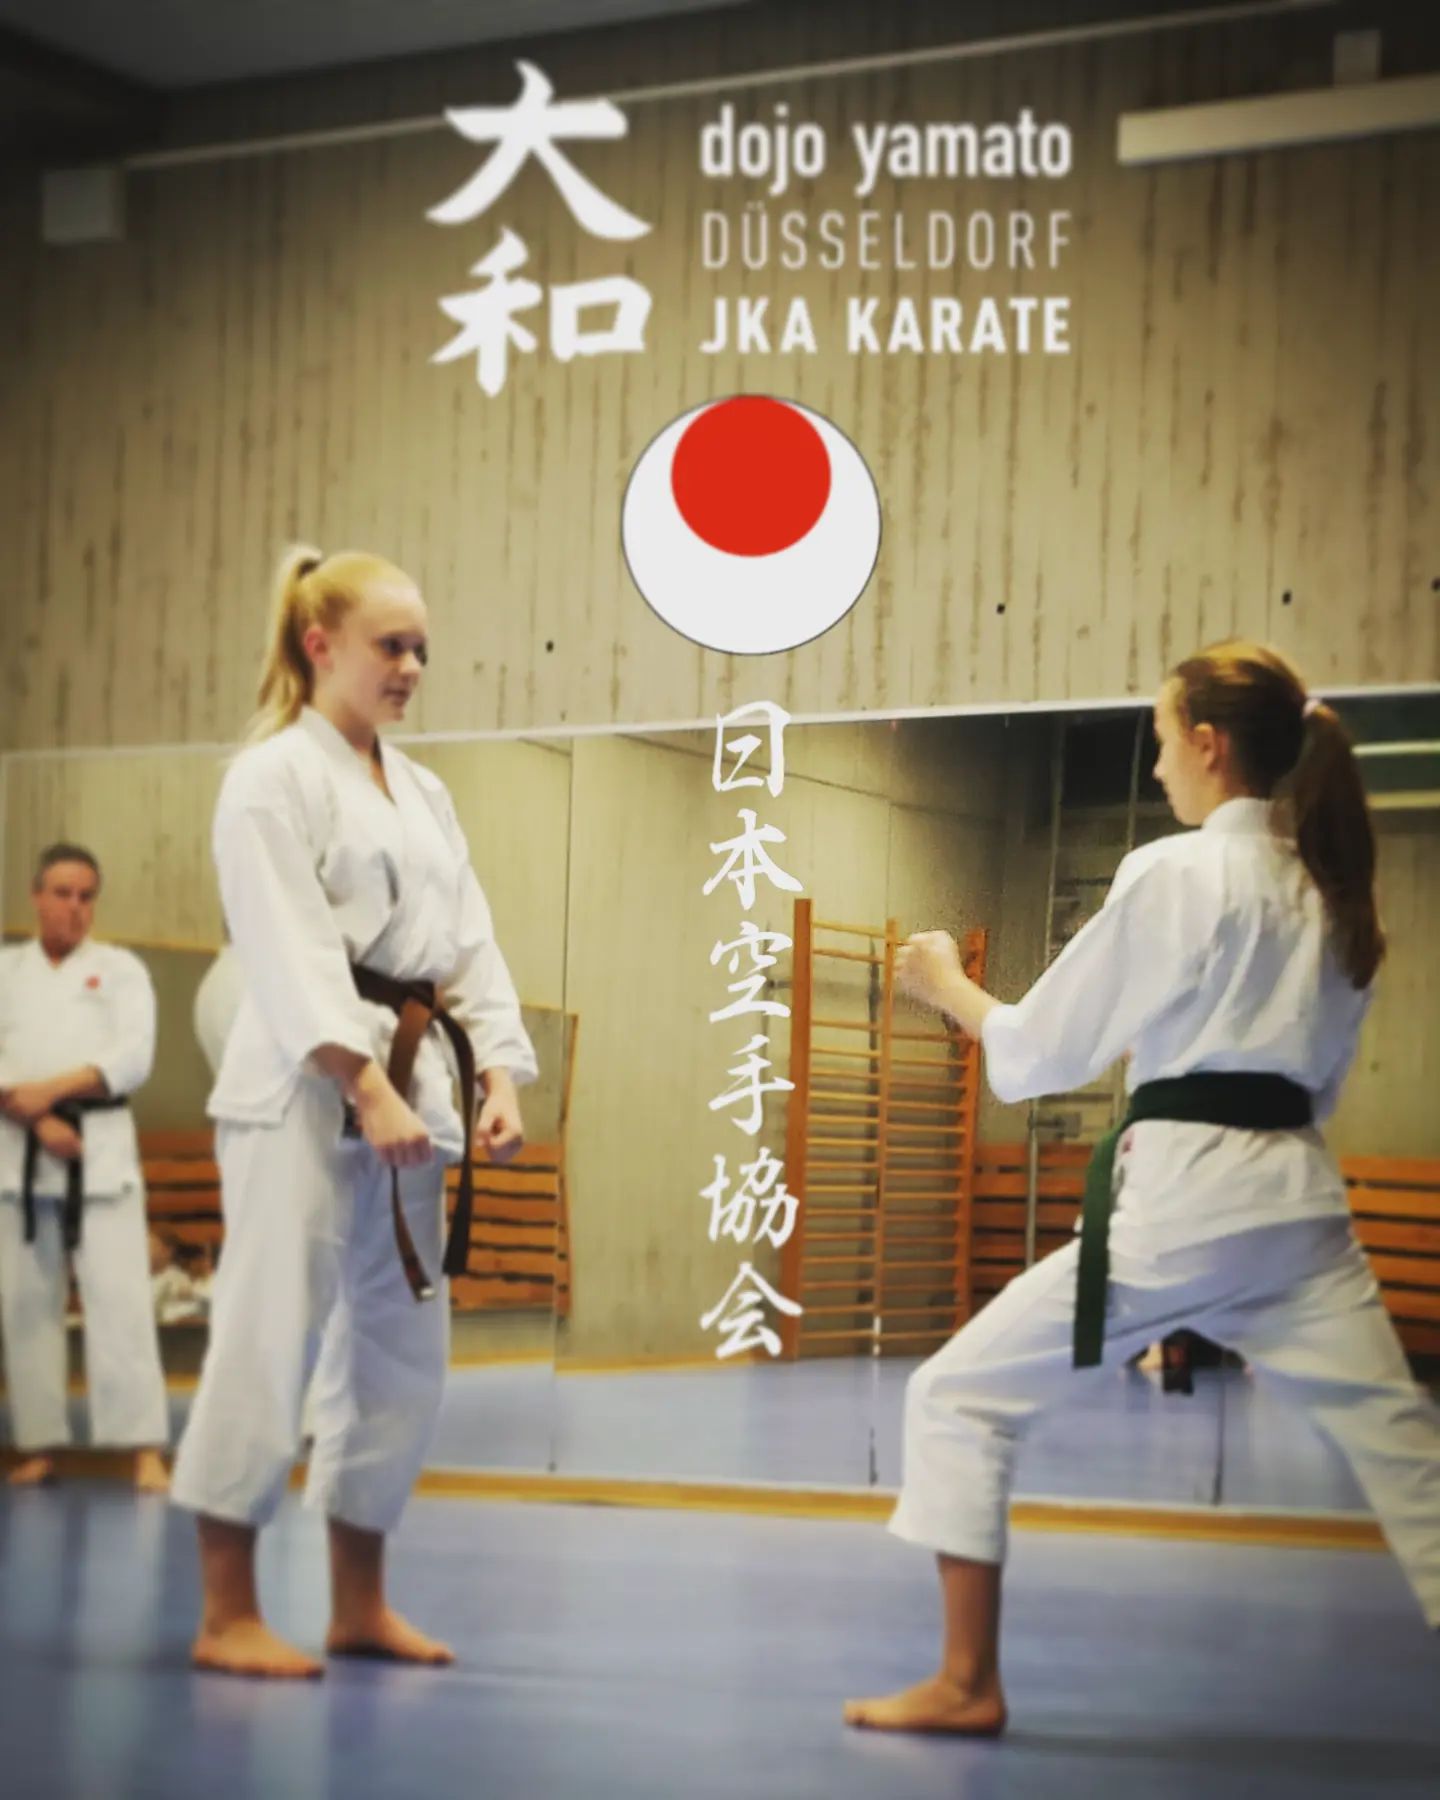 Training im Dojo Yamato Düsseldorf e.V. 🥋
.
.
.
..
.
.
.
#karate #training #fun #jka #djkb #kihon #kata #kumite #düsseldorf #duesseldorf #japan #sport #sportmotivation #shotokan #traditional #nrw #yamatoduesseldorf #fitness #fitnessmotivation #jkaKarate #jkakaratedo #neuss #ratingen #hilden #leverkusen #kaarst #selbstbstbewusstsein #selbstvertrauen